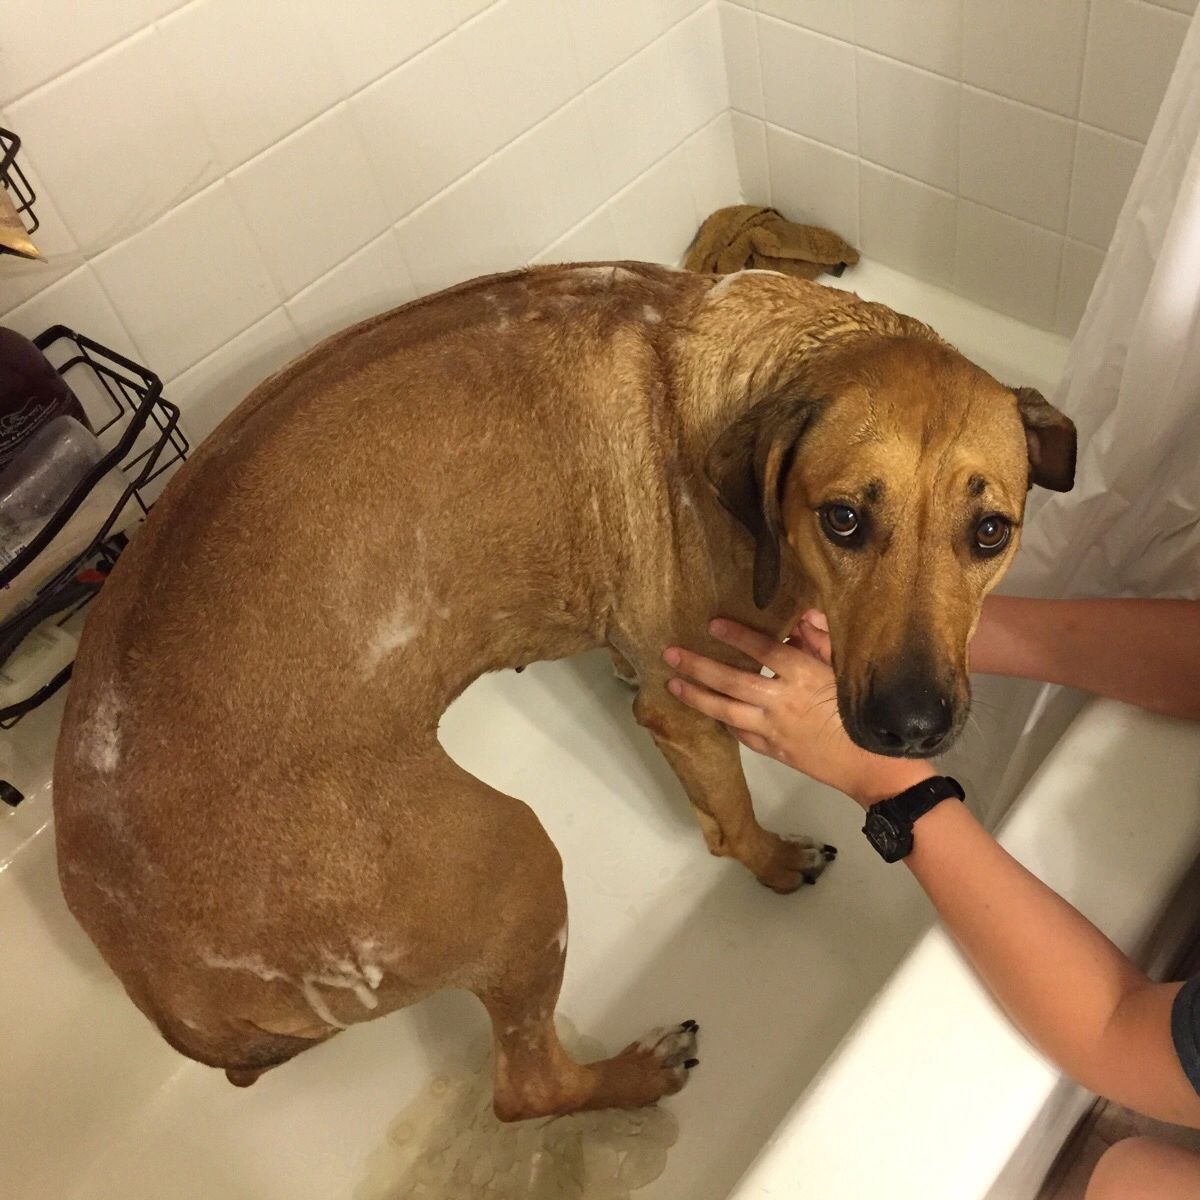 brown dog inside a white bathtub getting bathed by someone